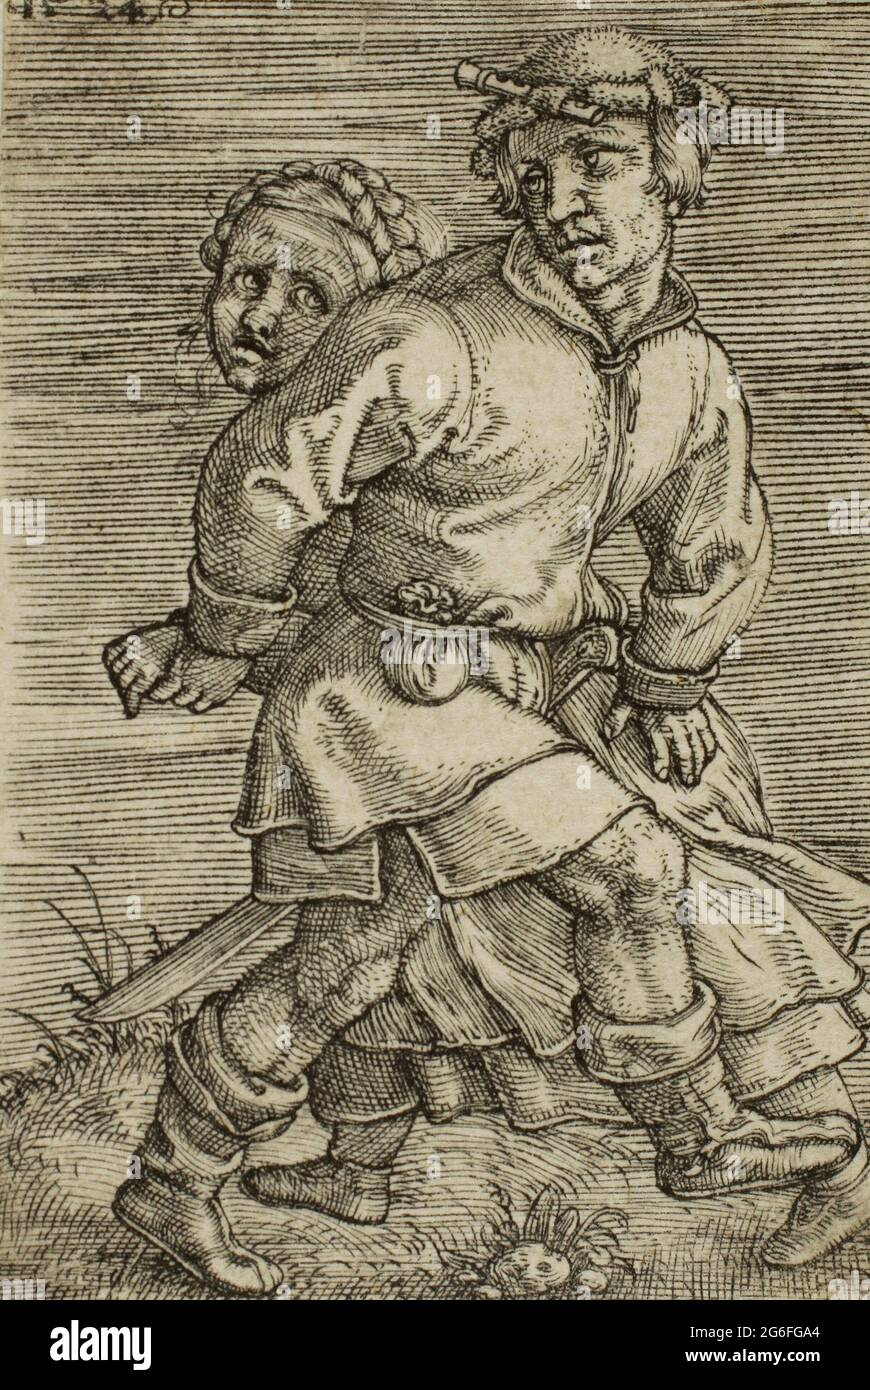 Barthel Beham. Peasant Couple Dancing - 1524 - Barthel Beham German, 1502-1540. Engraving in black on ivory laid paper. Germany. Stock Photo